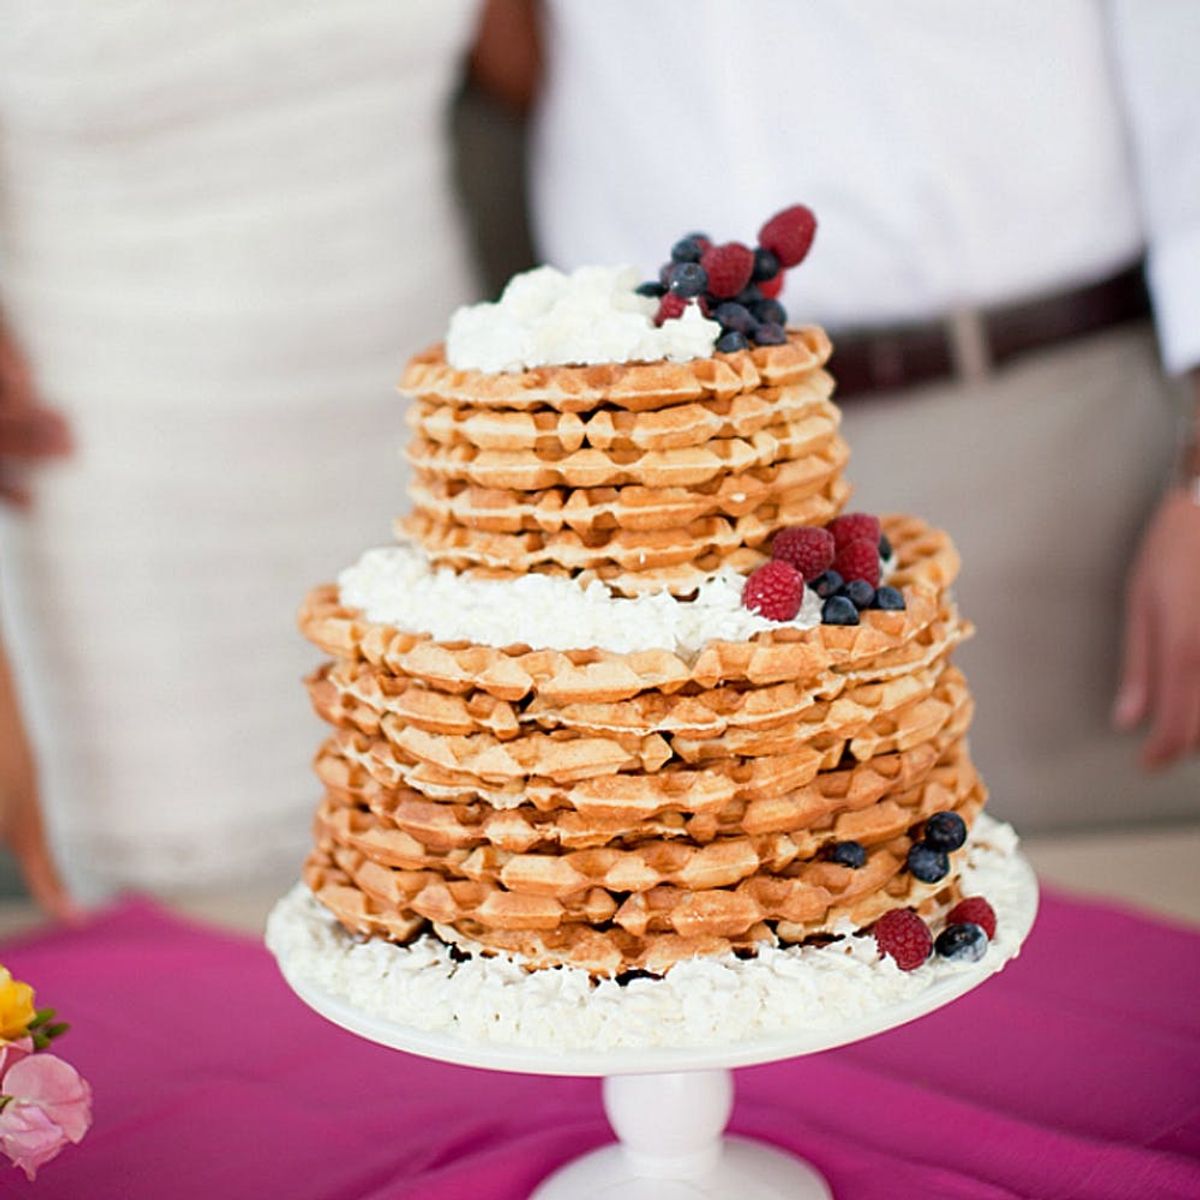 10 Amazing Wedding Cake Alternatives for Your Big Day